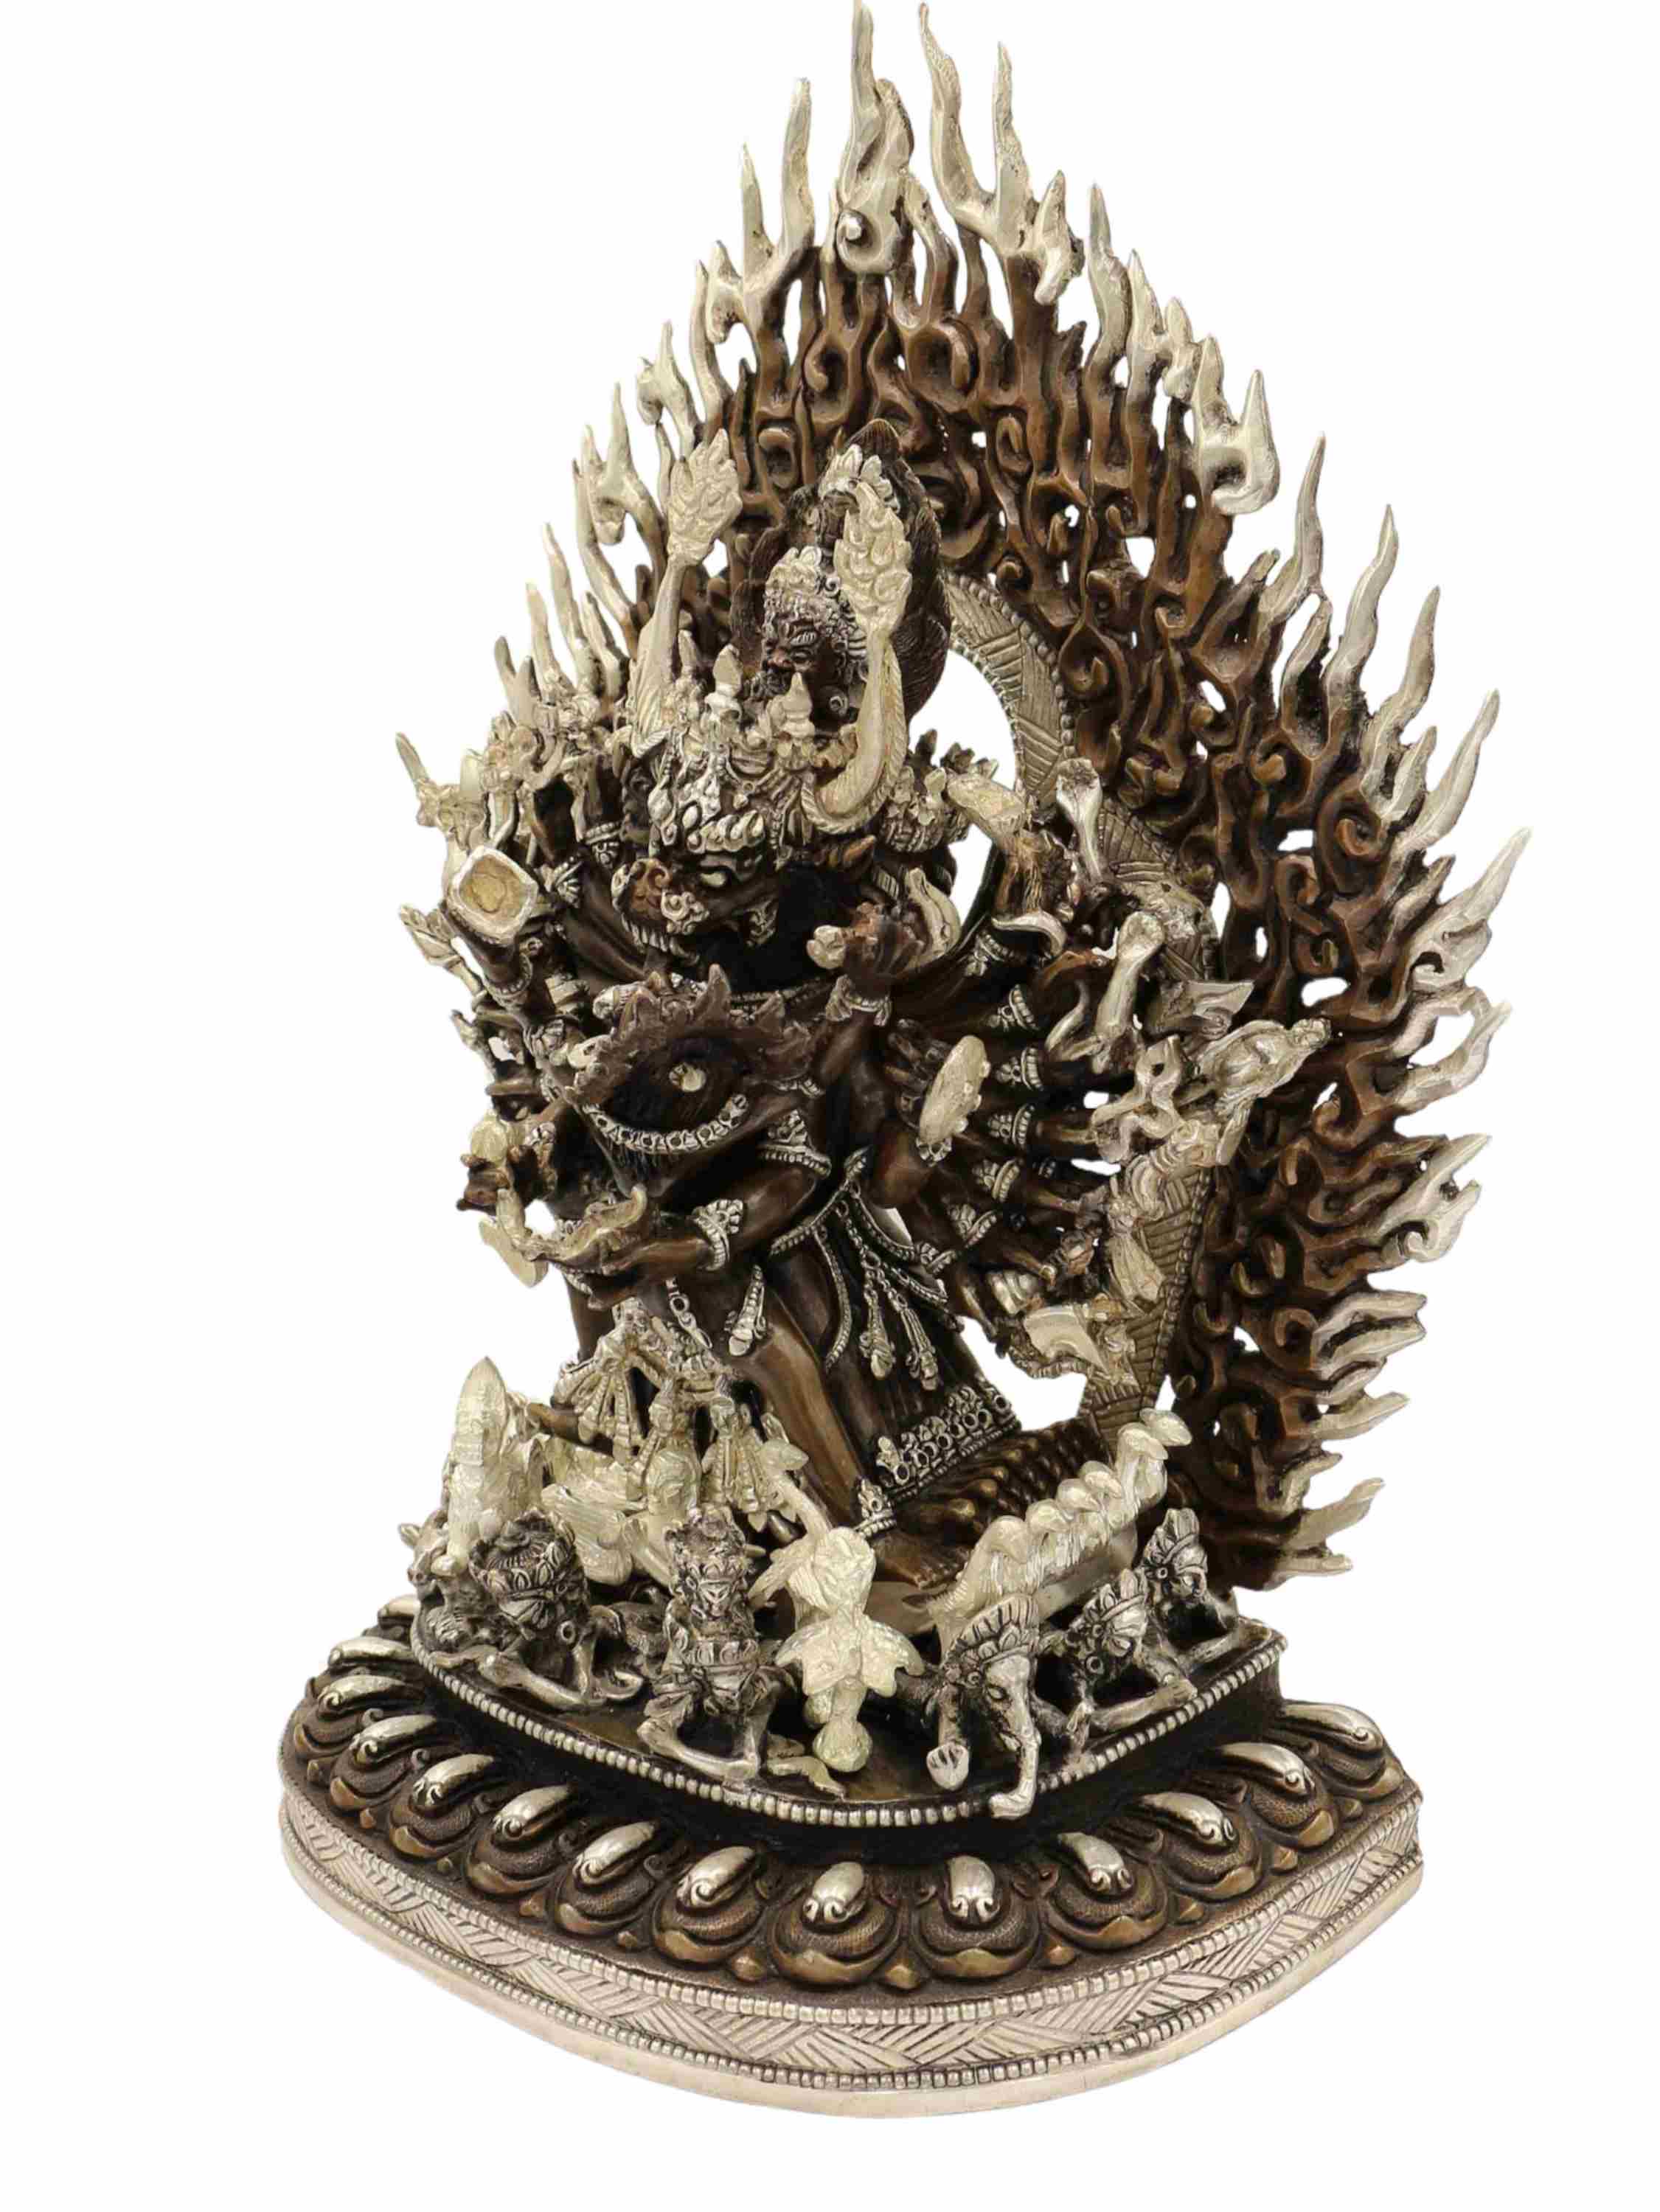 Buddhist Handmade Statue Of yamantaka Vajrabhairava, chocolate Oxidation With Silver Plating